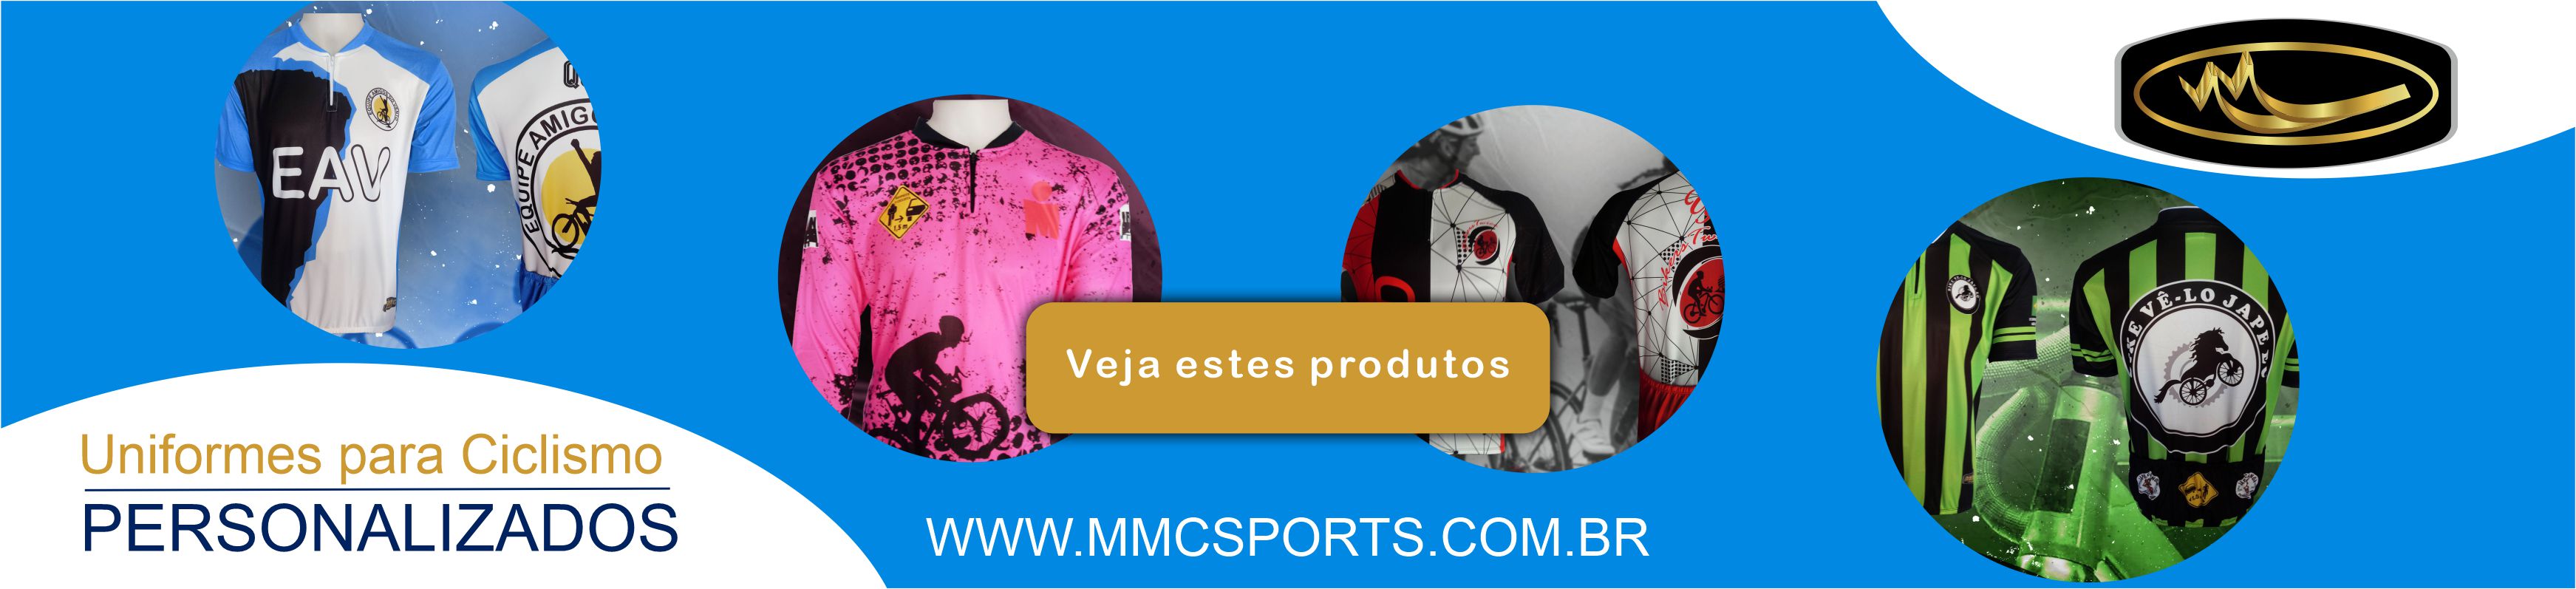 home - 1 banner uniformes para ciclismo personalizados MMC Sports